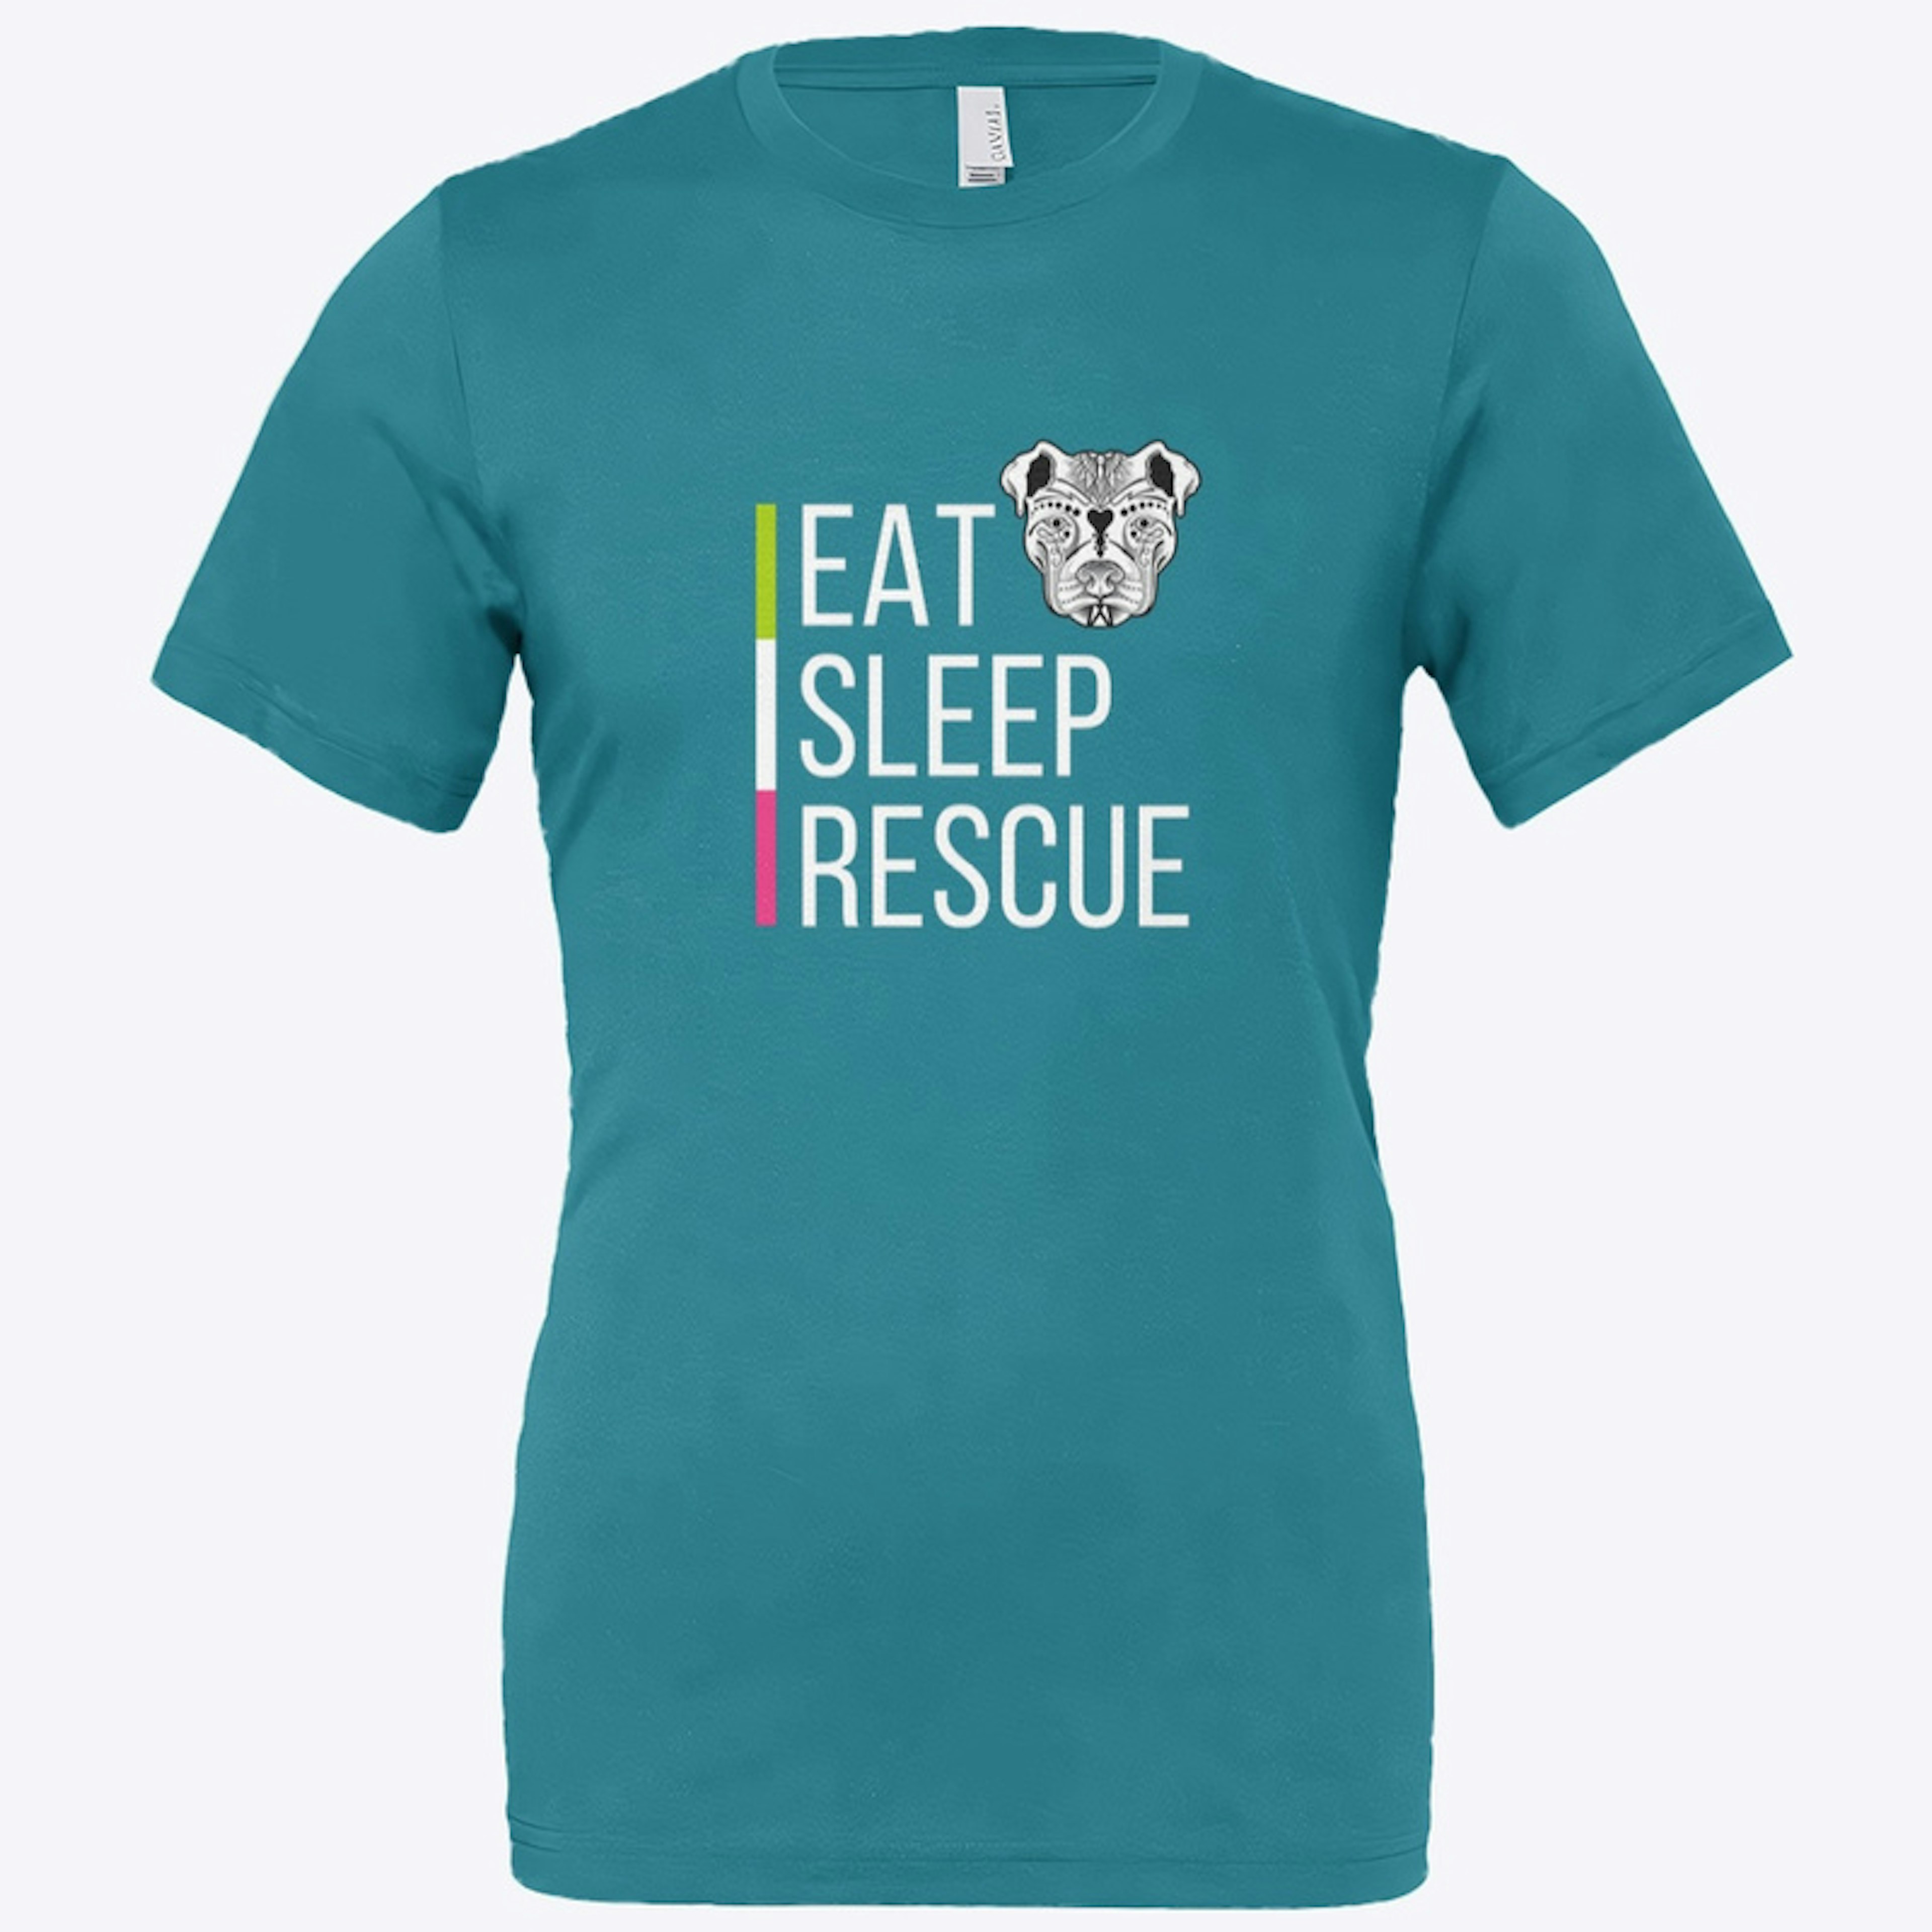 ODHS “Eat Sleep Rescue” T-shirt